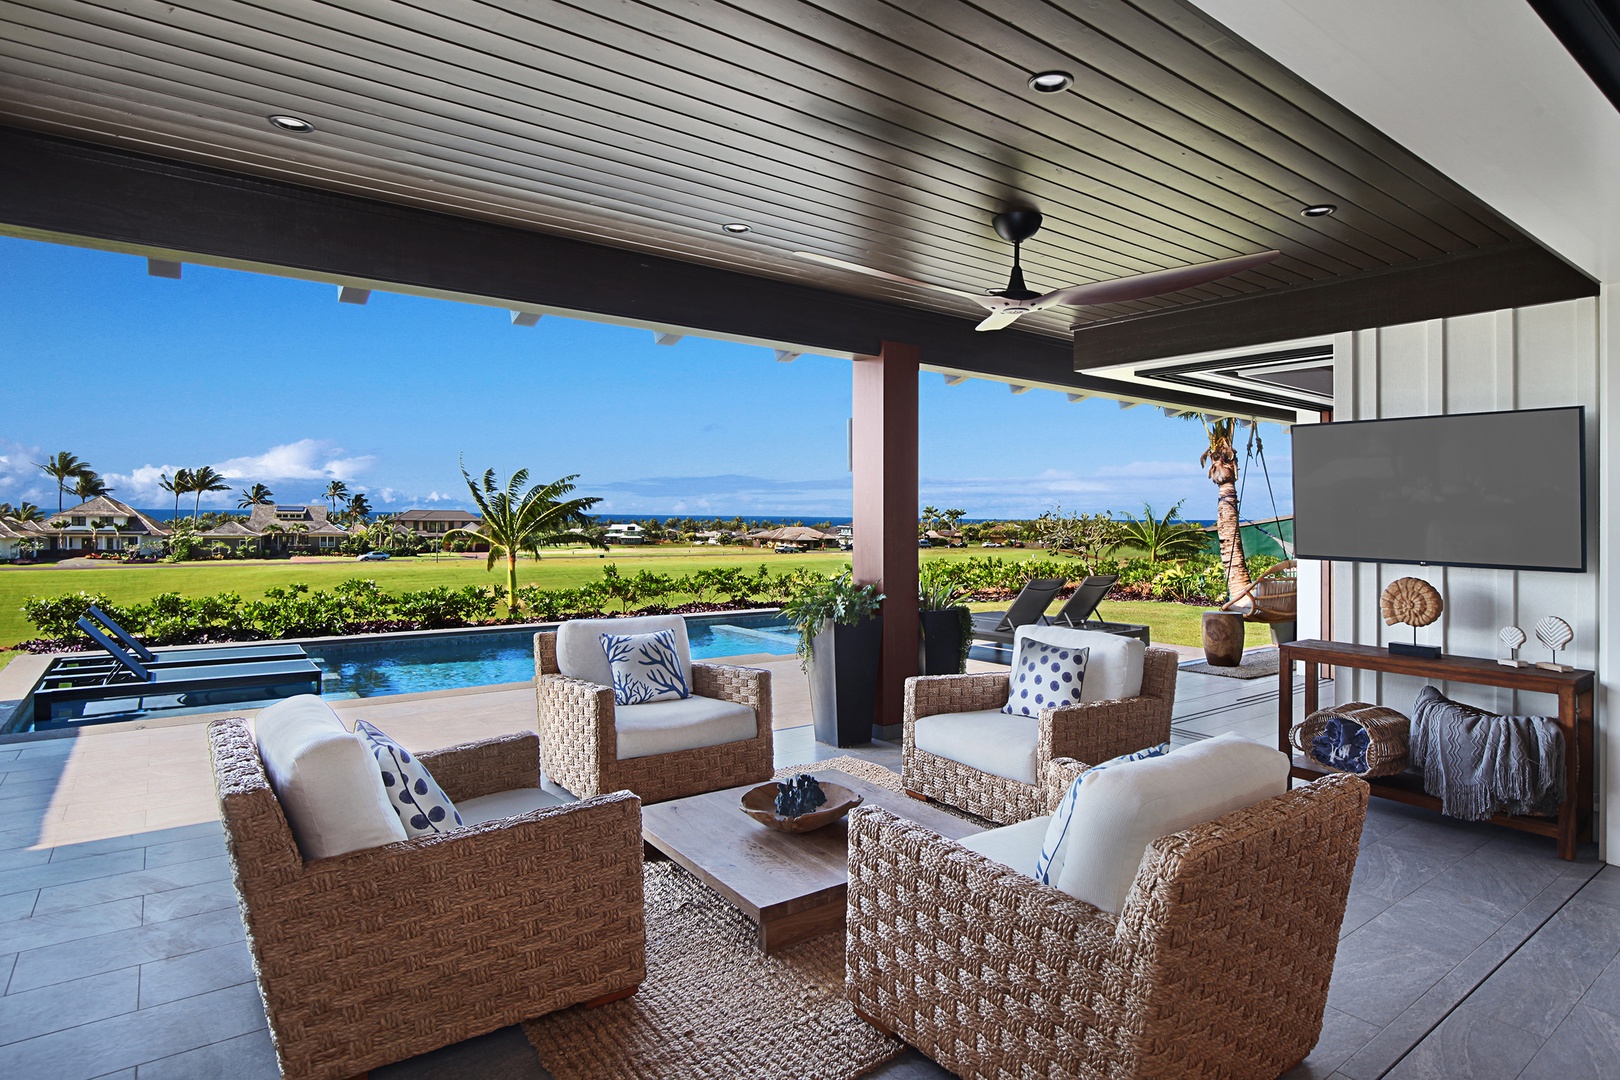 Koloa Vacation Rentals, Hale Kainani #6 E Komo Mai - Outdoor living space with ocean views